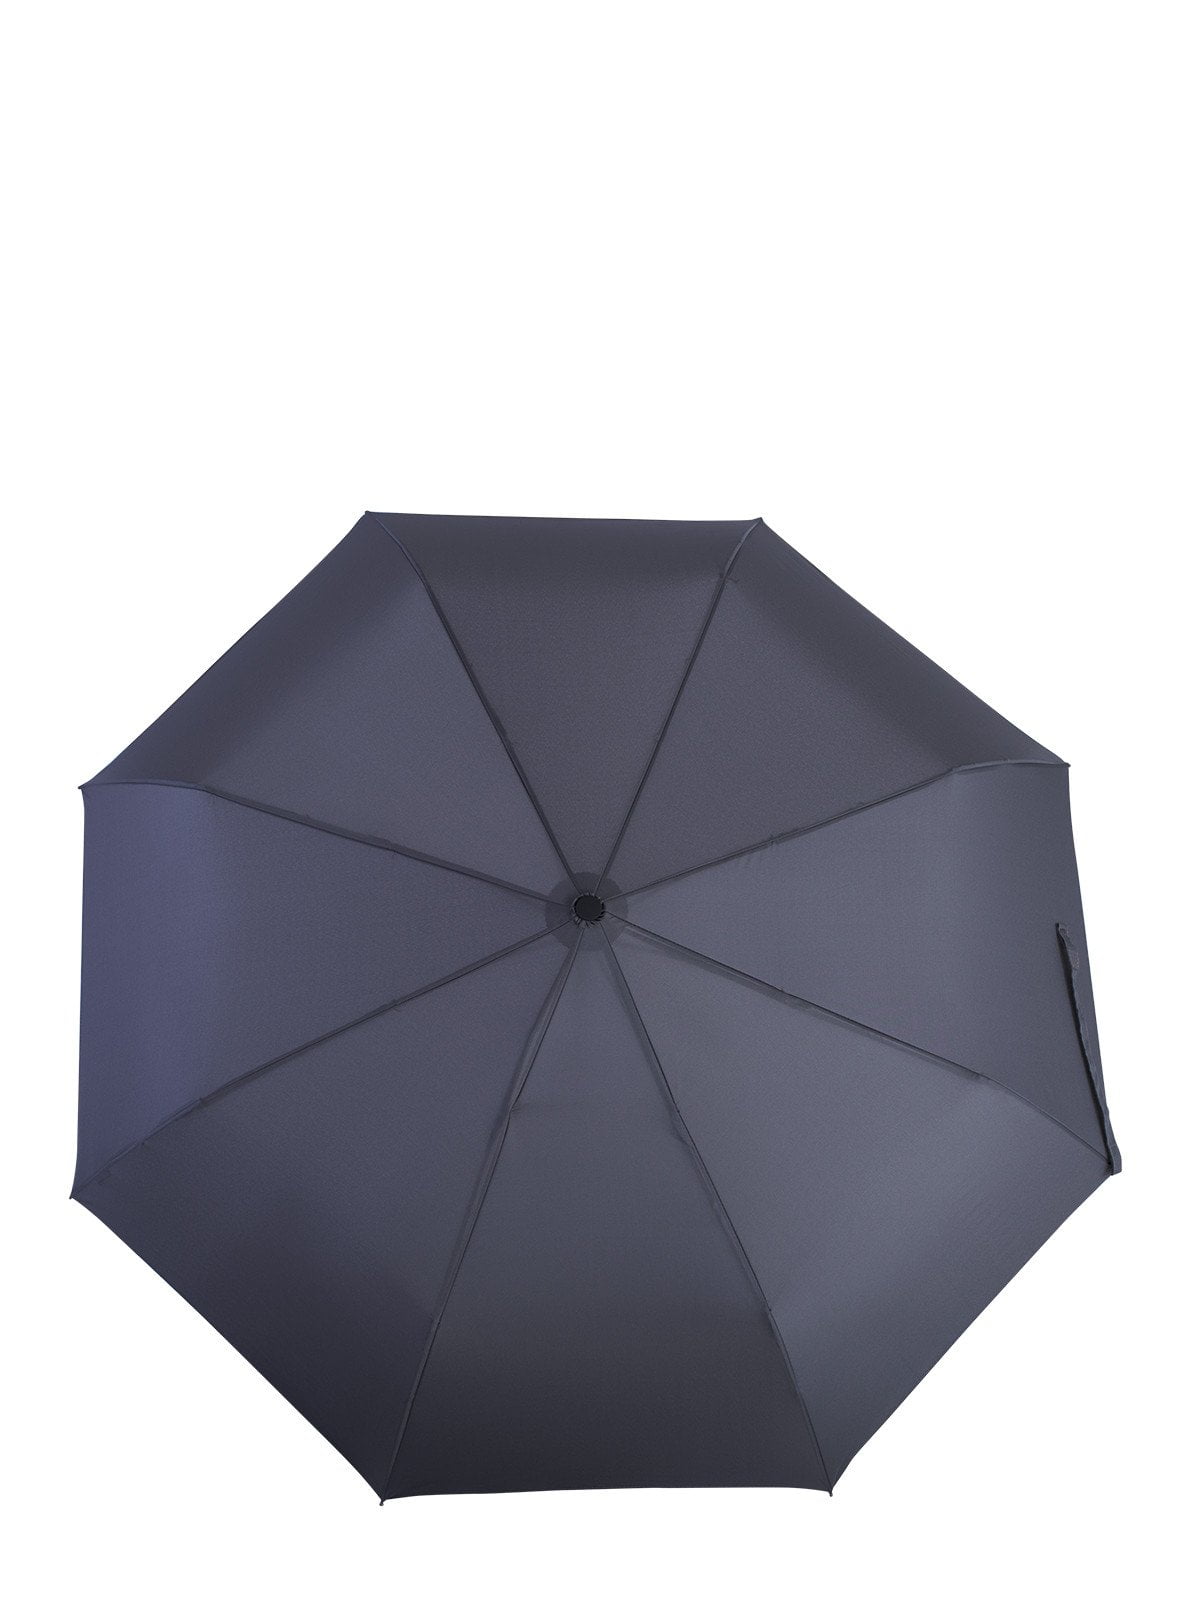 Belami by Knirps The Original Telescopic Umbrella - Solids Grey